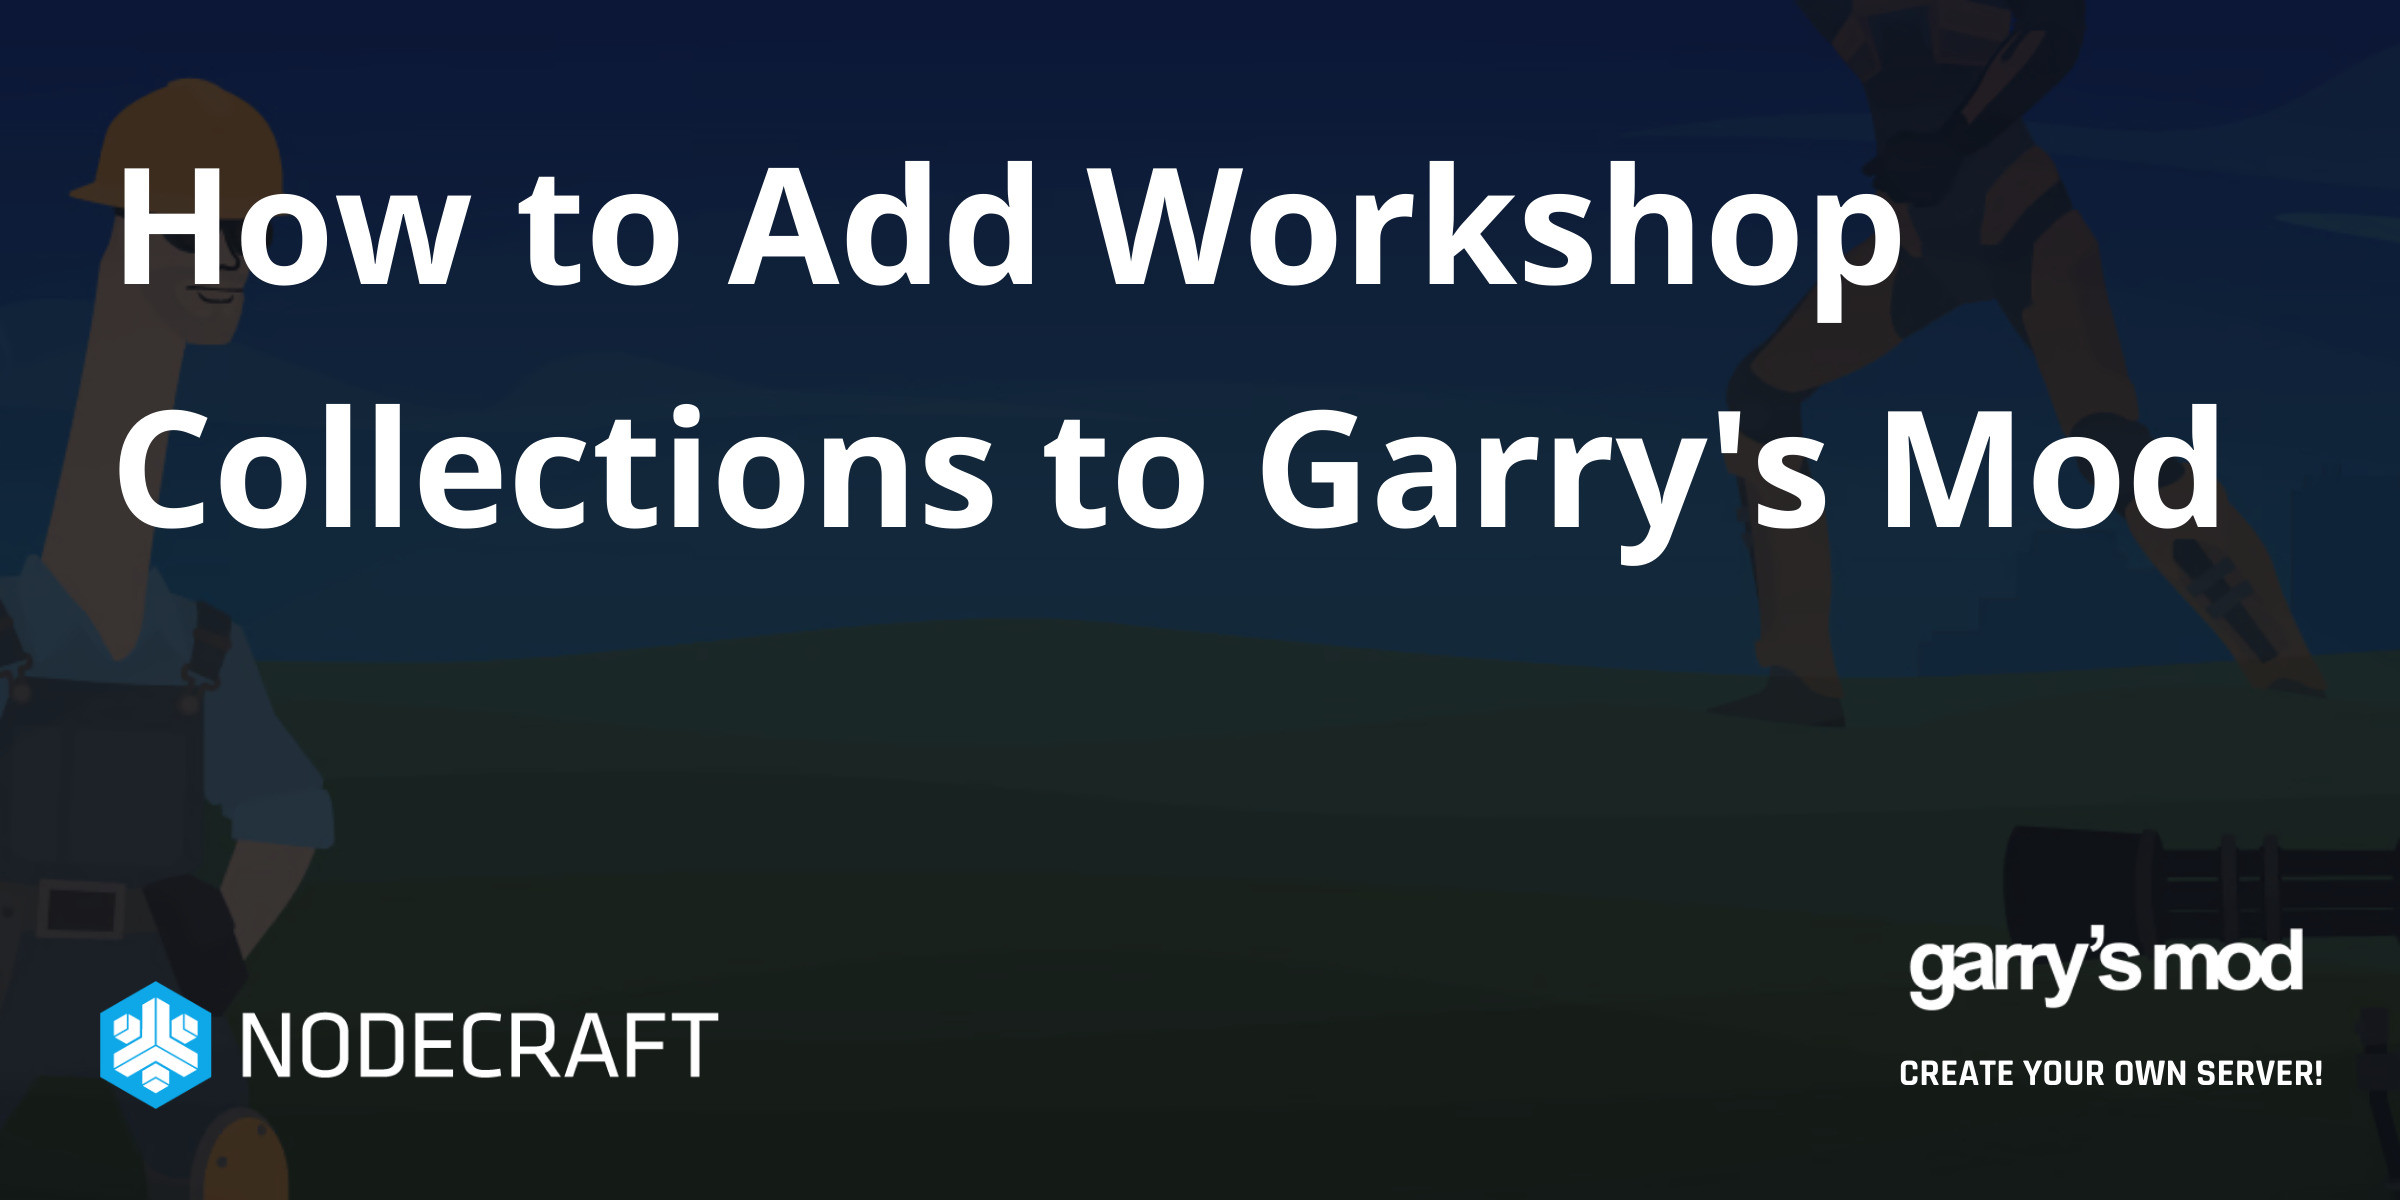 Garry's mod Mobile source engie (no link) 